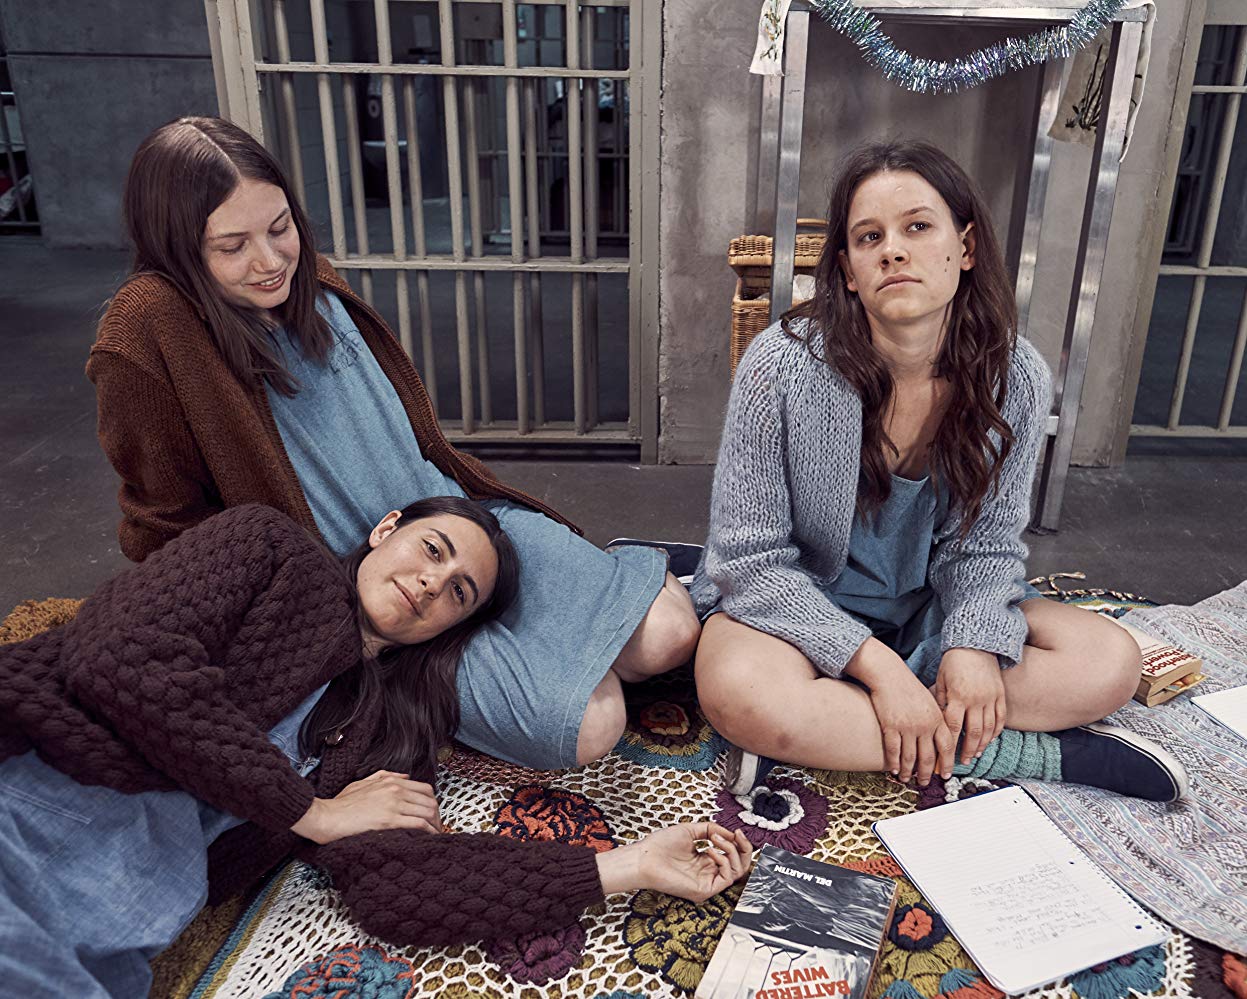 The Manson Girls - (clockwise from bottom left) Susan Atkins (Marianne Rendon), Leslie Van Houten (Hannah Murray) and Patricia Krenwinkle (Sosie Bacon) in Charlie Says (2018)